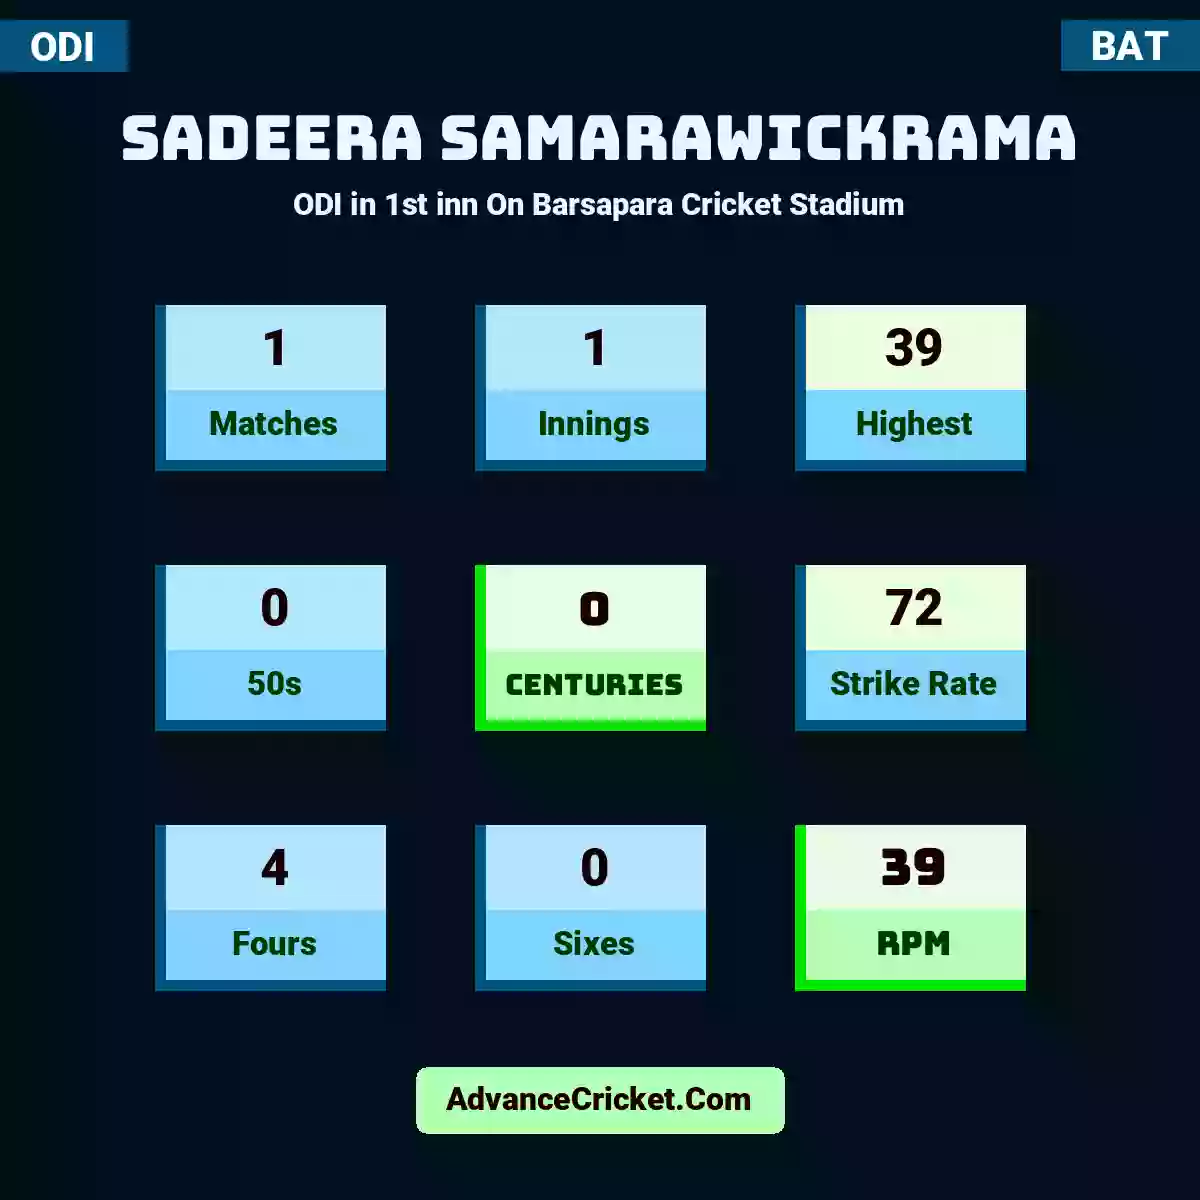 Sadeera Samarawickrama ODI  in 1st inn On Barsapara Cricket Stadium, Sadeera Samarawickrama played 1 matches, scored 39 runs as highest, 0 half-centuries, and 0 centuries, with a strike rate of 72. S.Samarawickrama hit 4 fours and 0 sixes, with an RPM of 39.